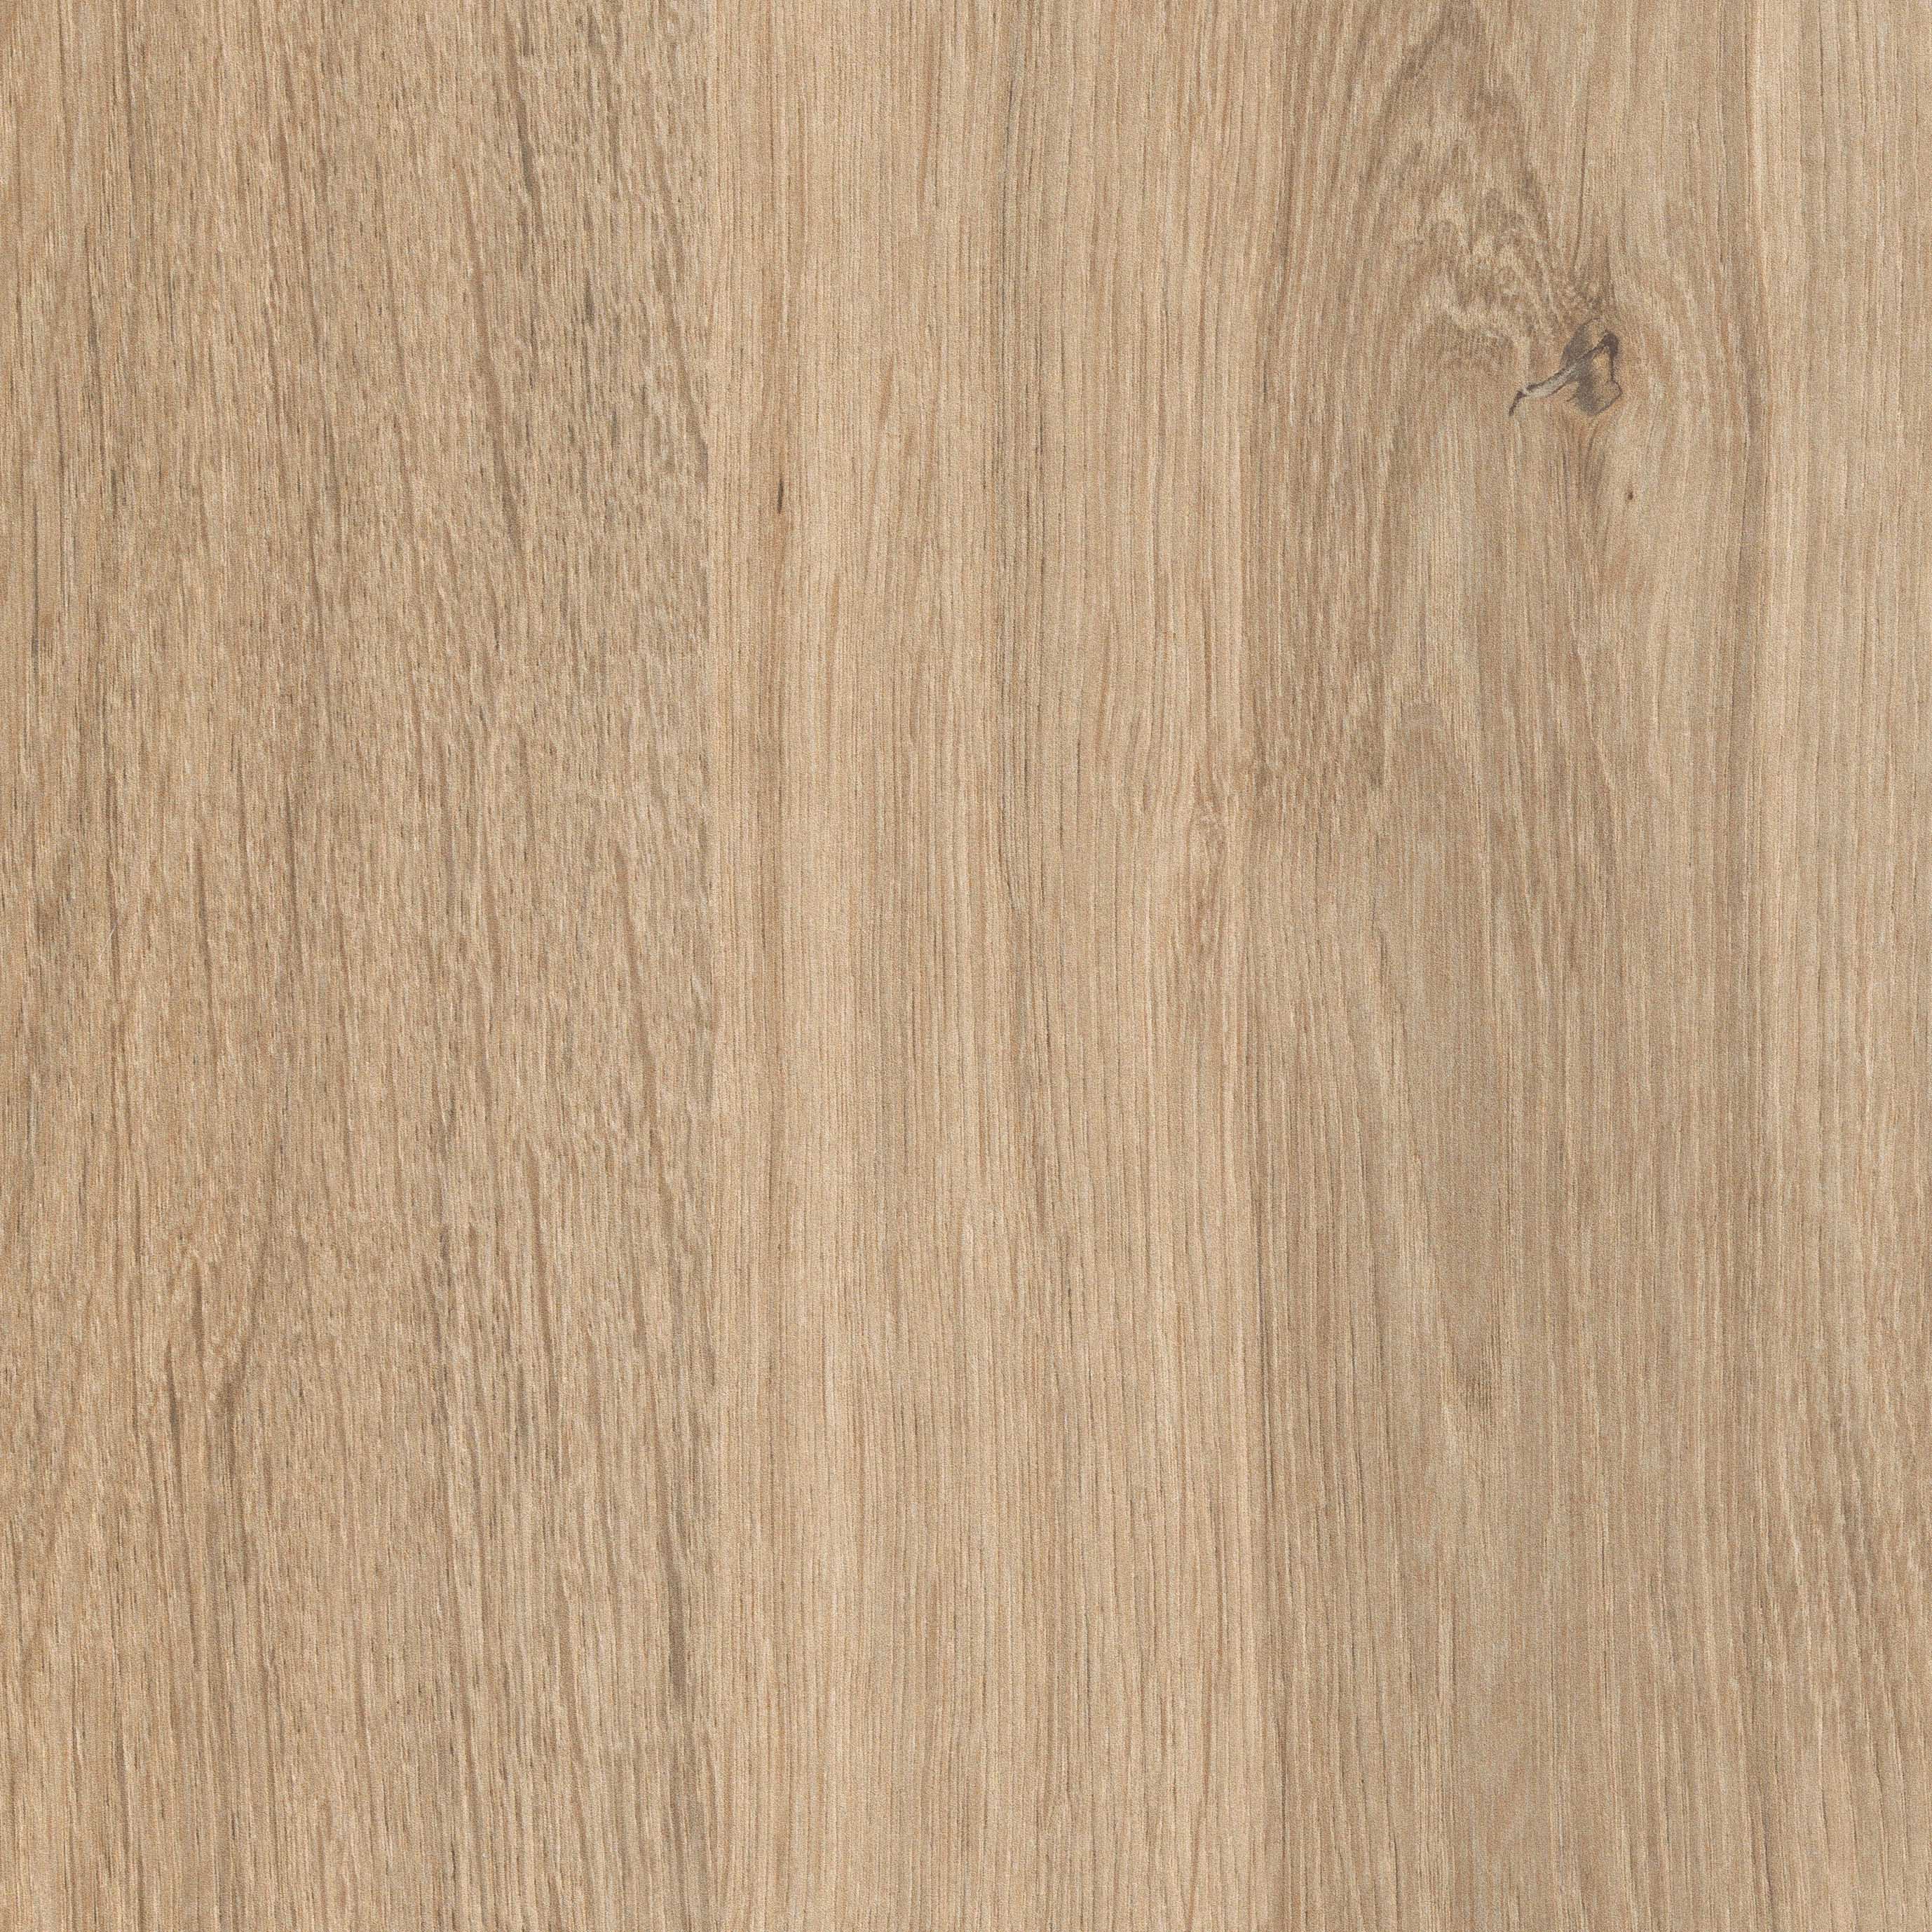 Decor SwissSPAN Holz (PG4) - D 4428 OV Eiche Natur  19 mm - 2800 x 2070 mm